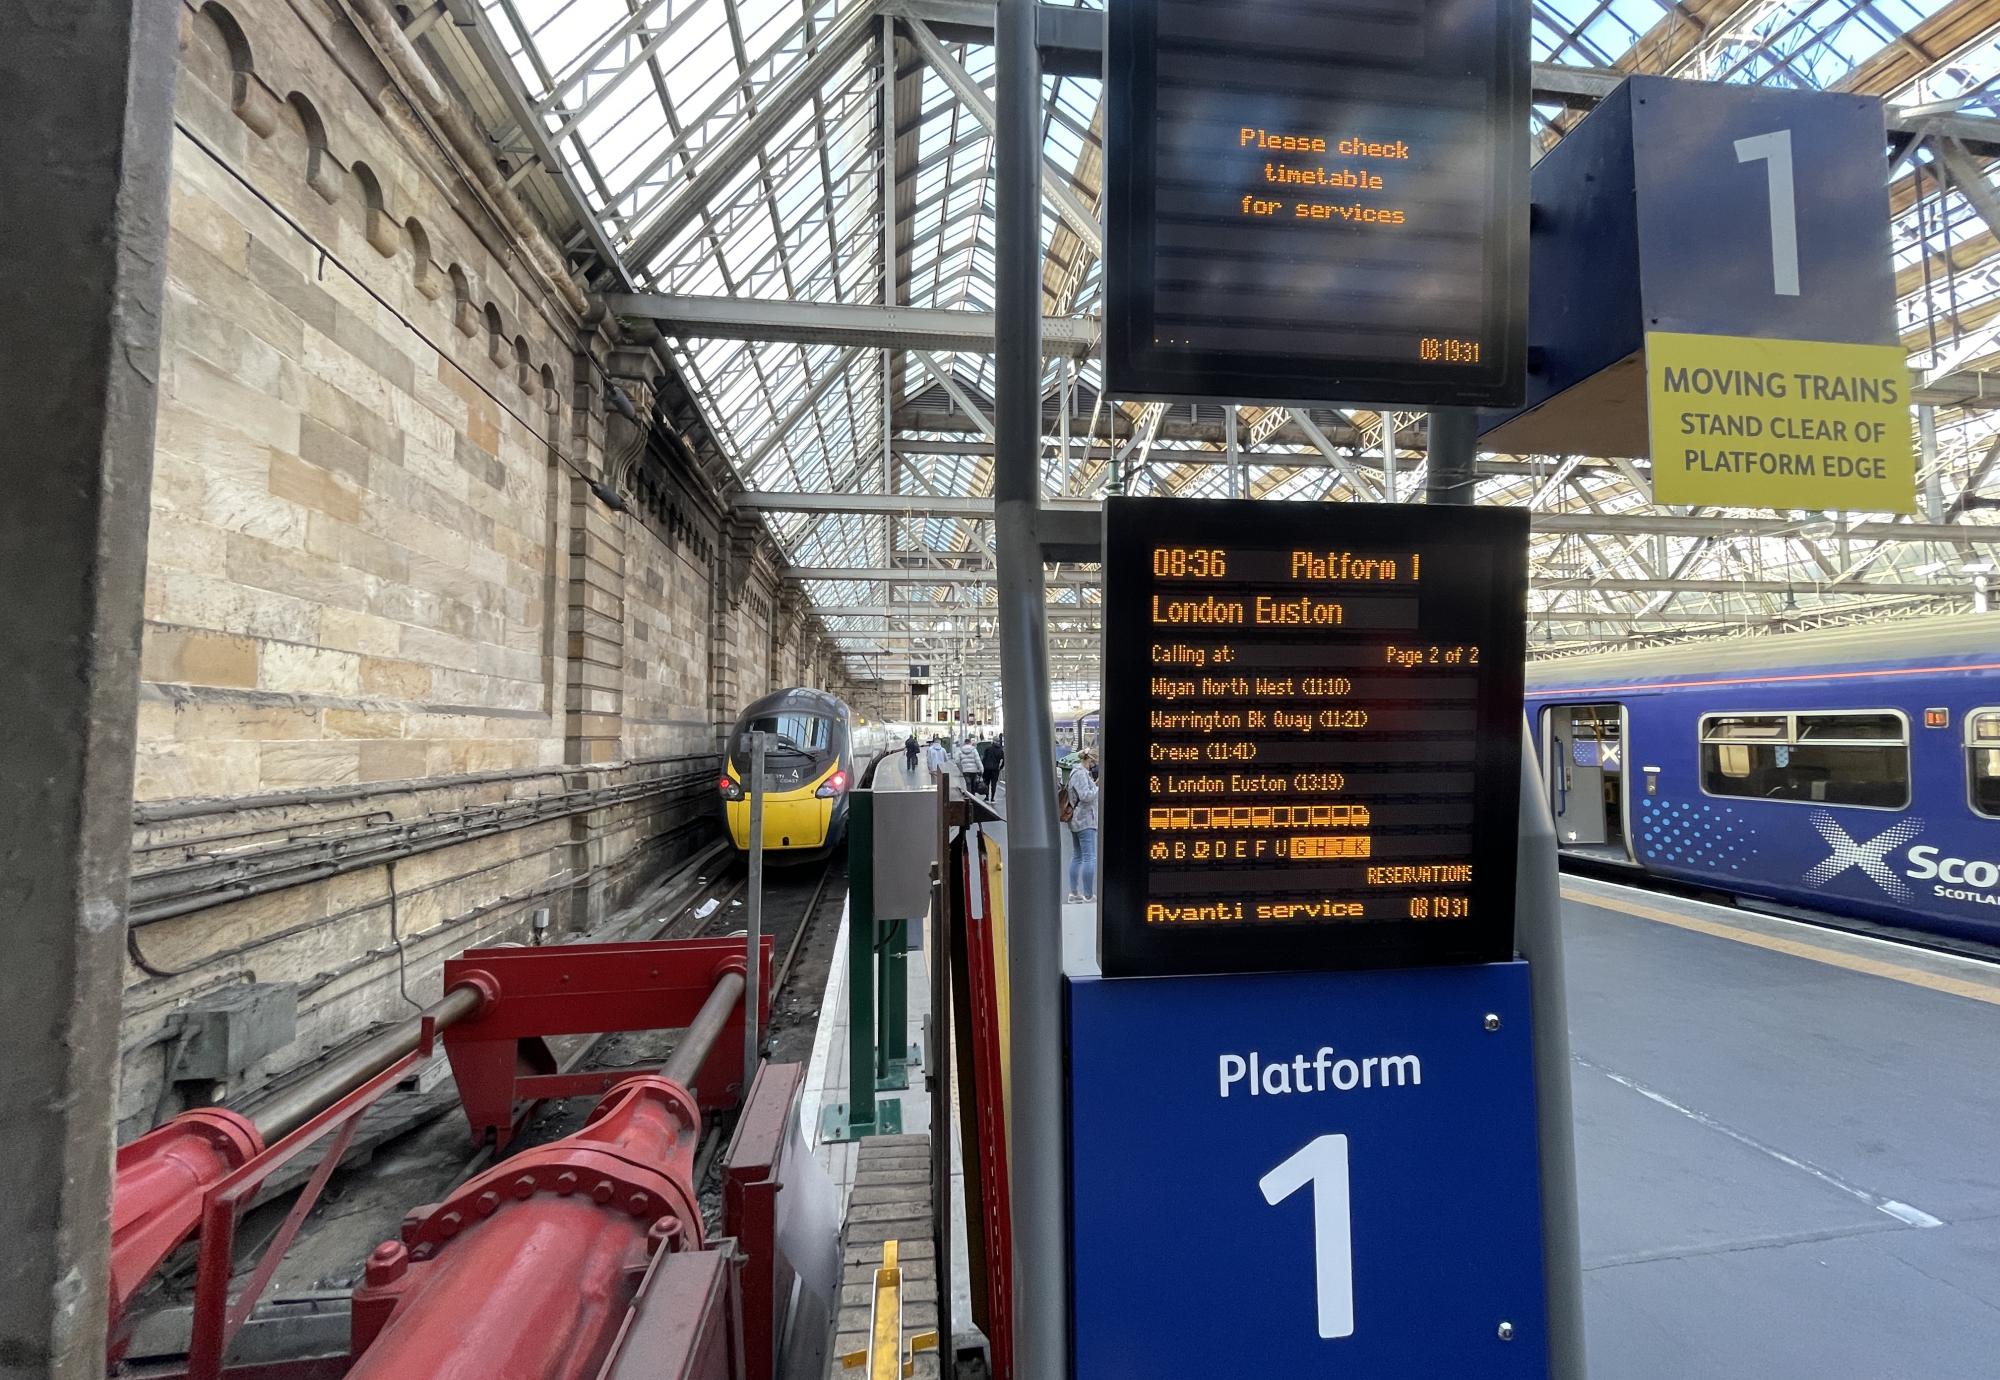 Glasgow Central Platform One, via Network Rail 